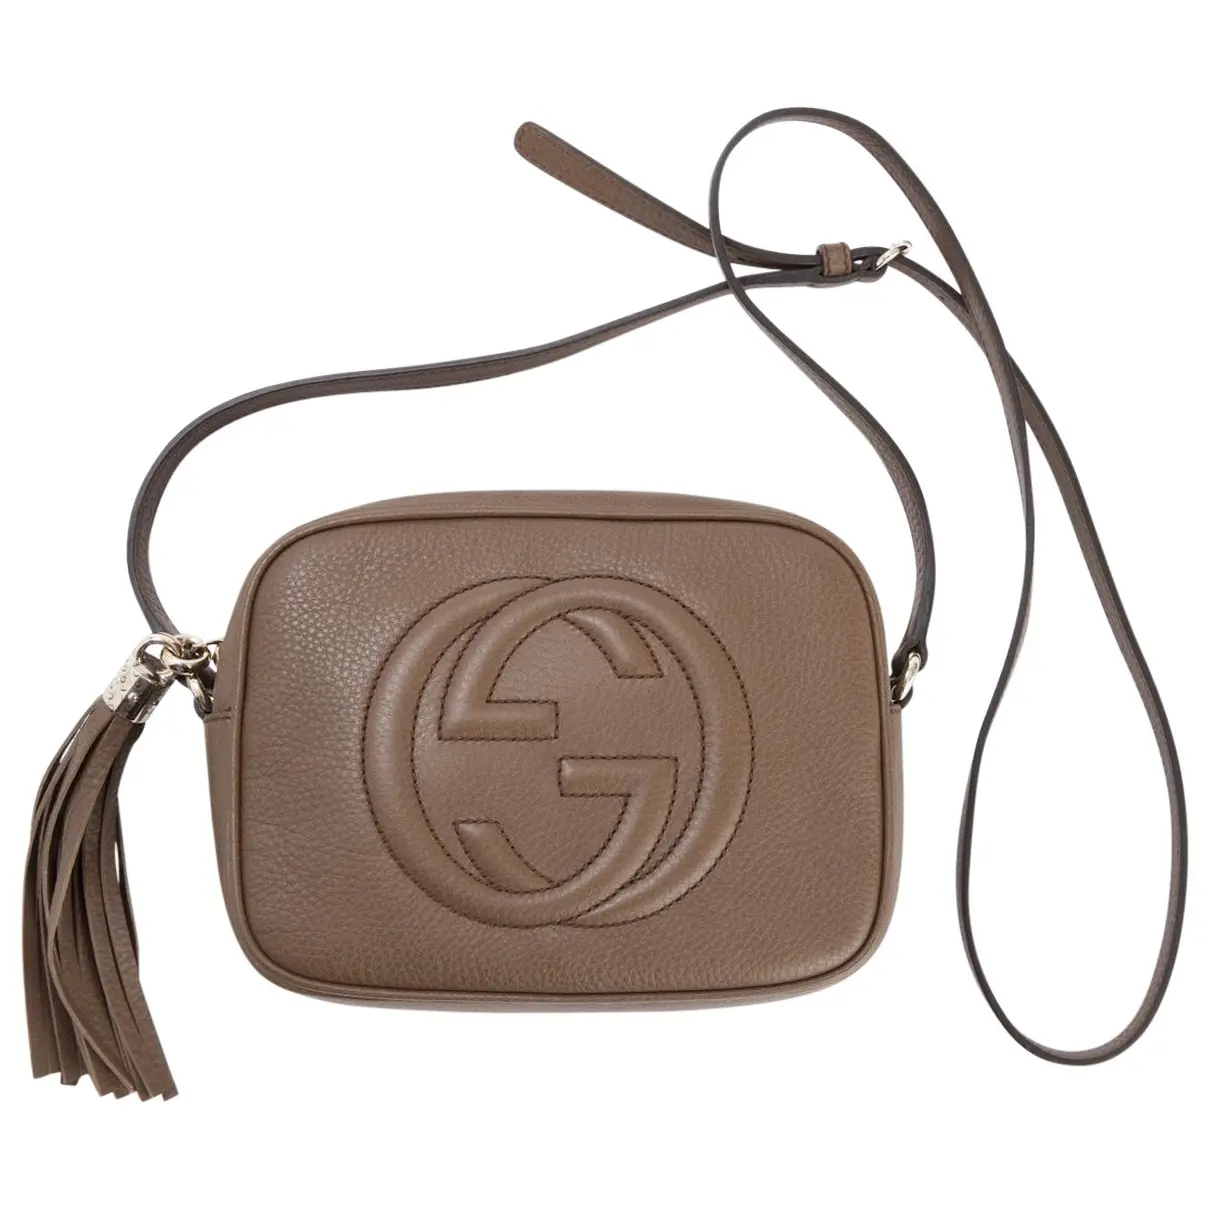 Leather "Disco Bag Soho" model handbag. Gucci